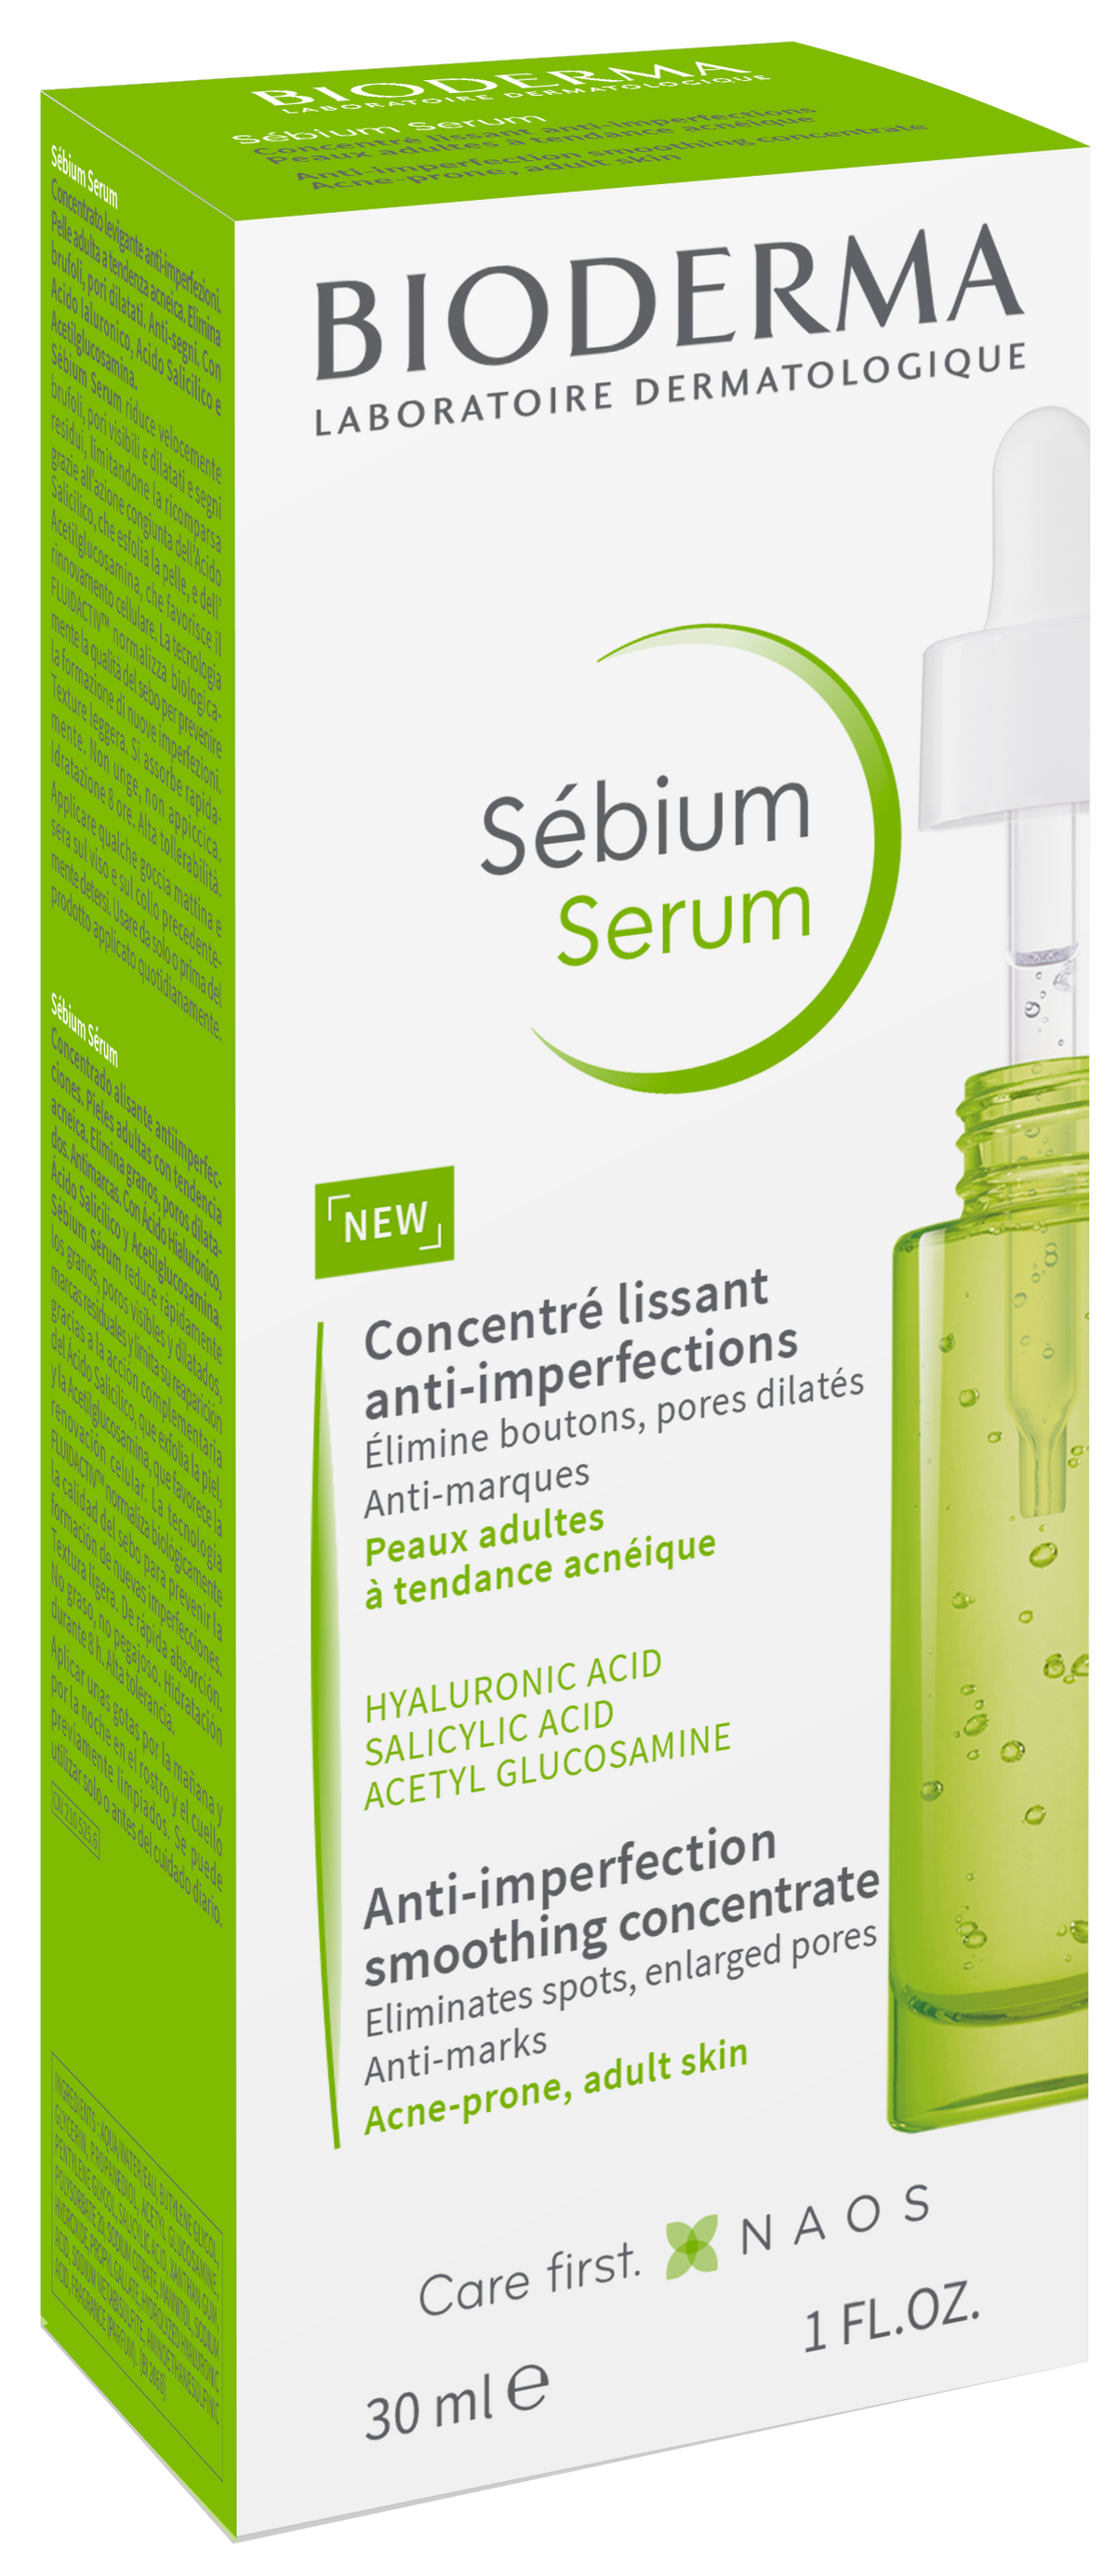 Bioderma Sebium Serum 30ml | Ultimate Salicylic Acid Solution for Acne & Pores